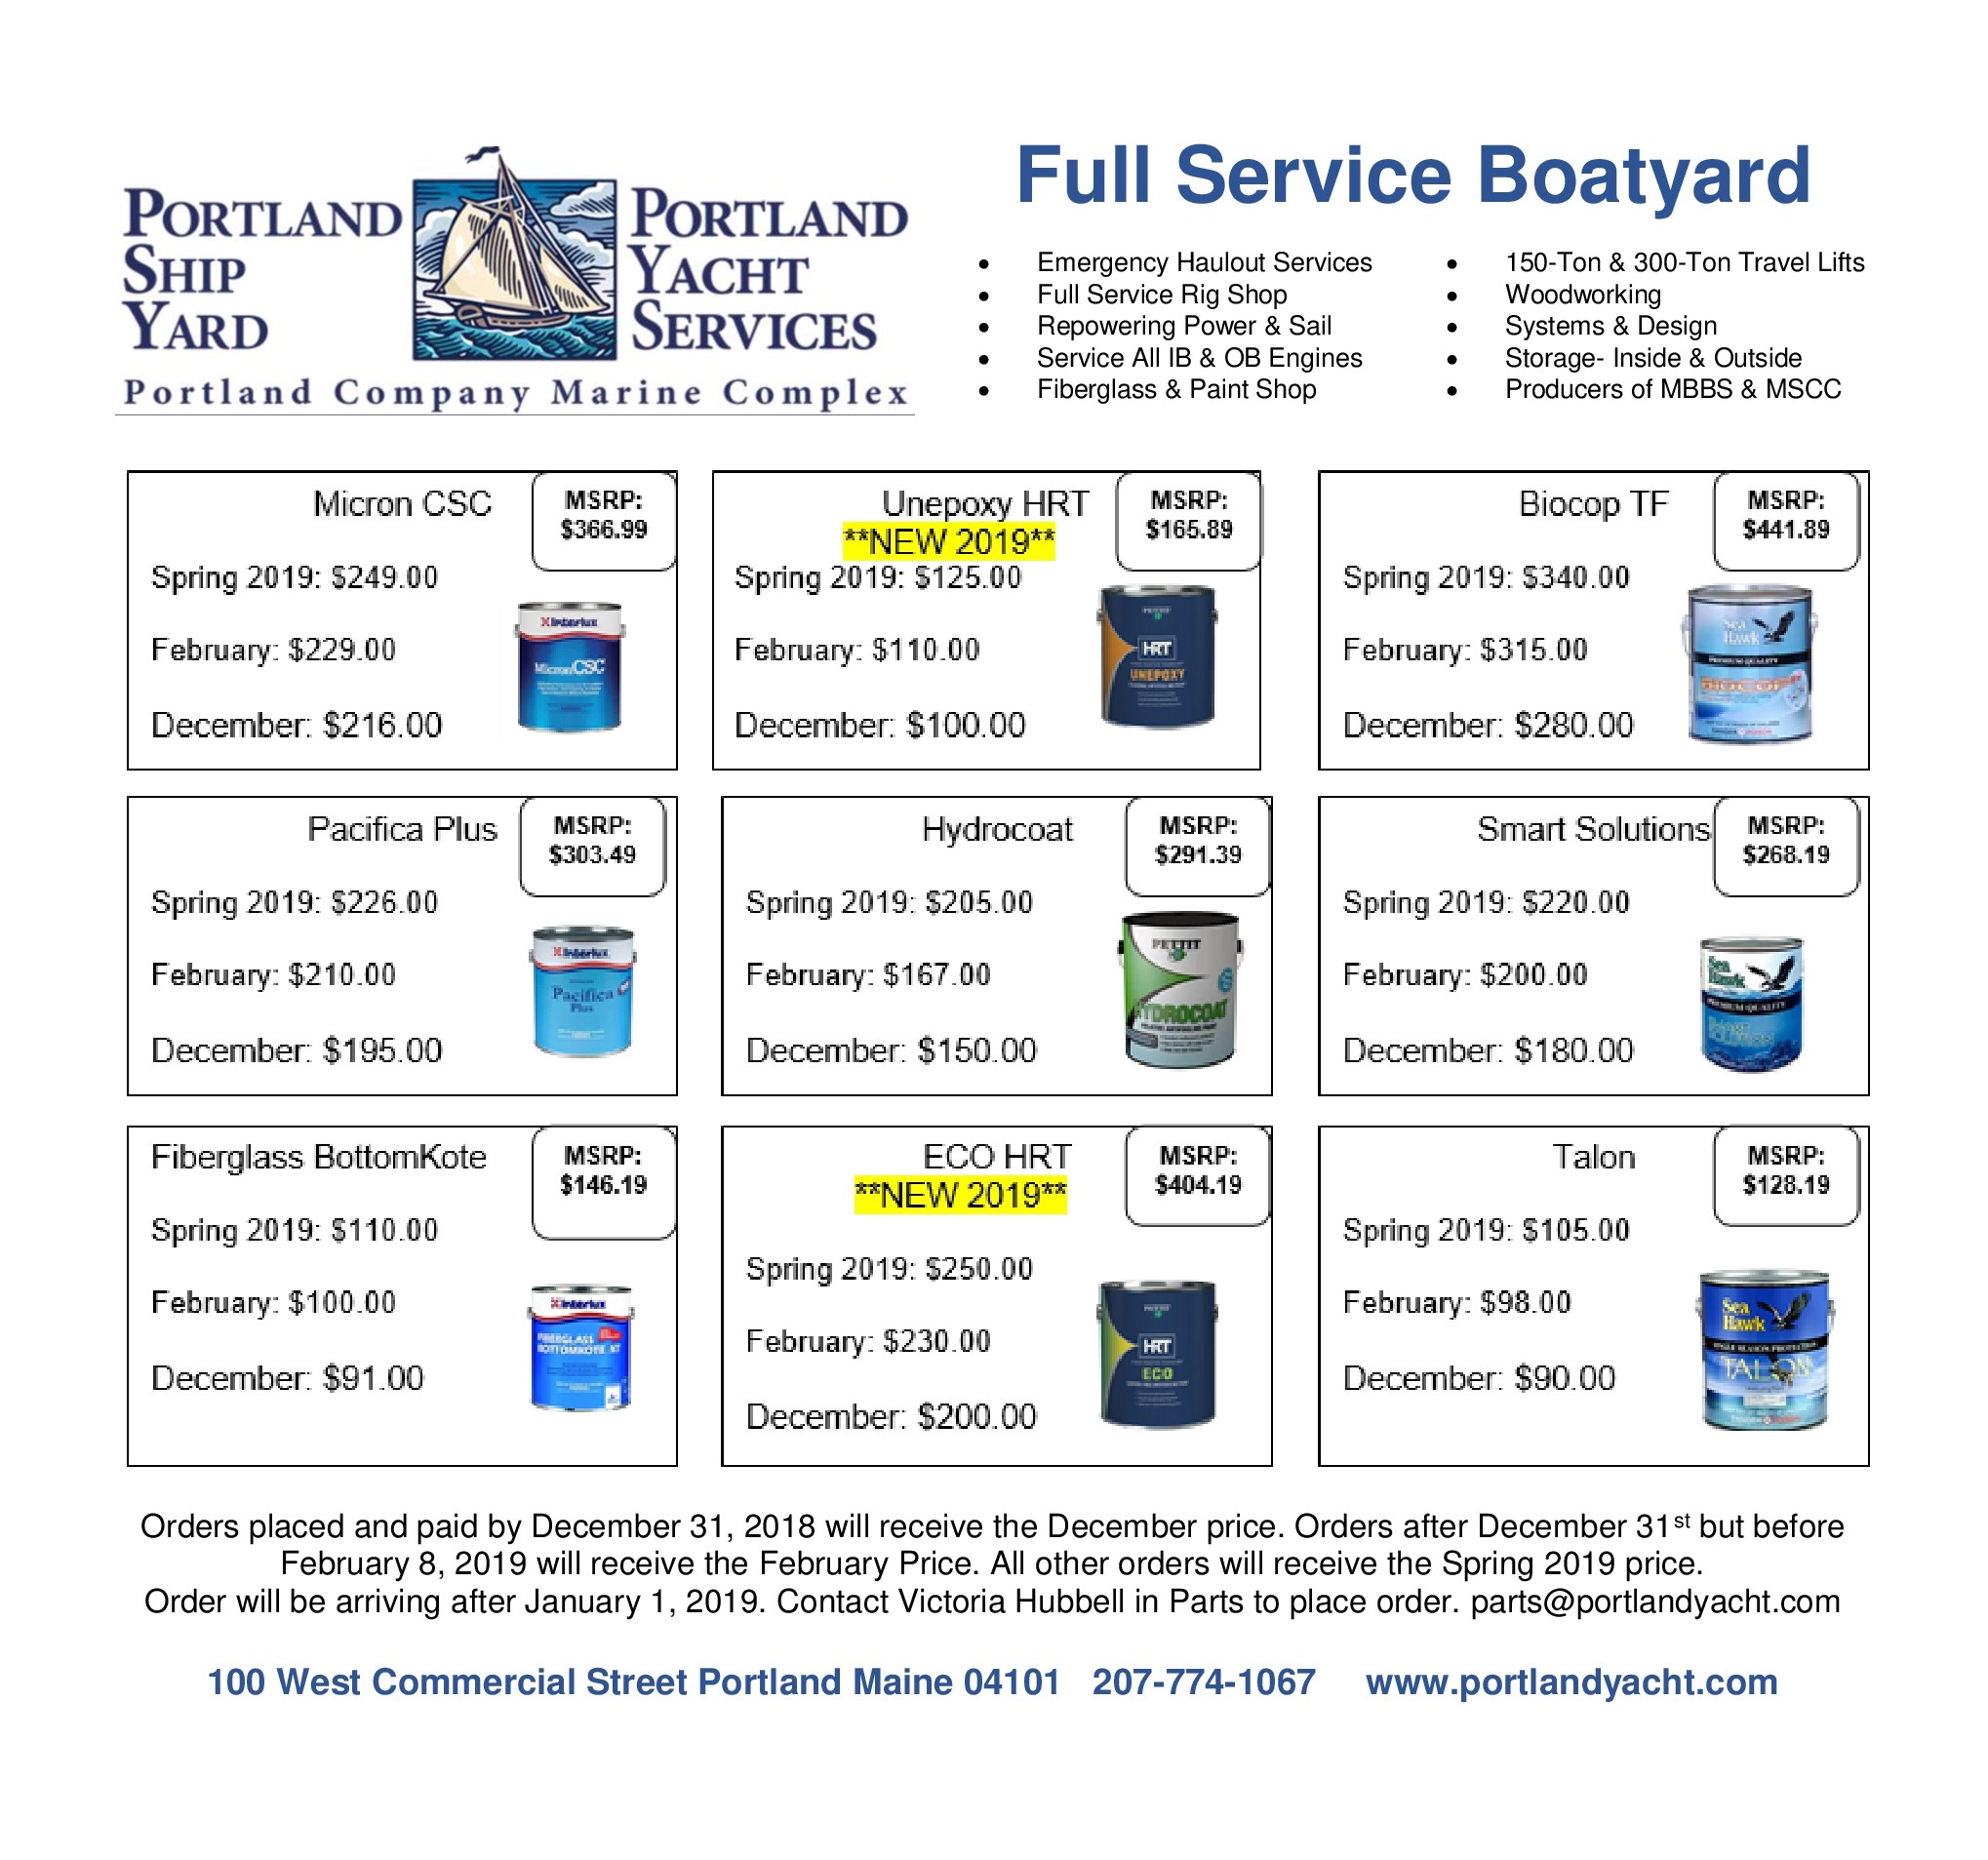 Portland Yacht Services: Full Service Boatyard